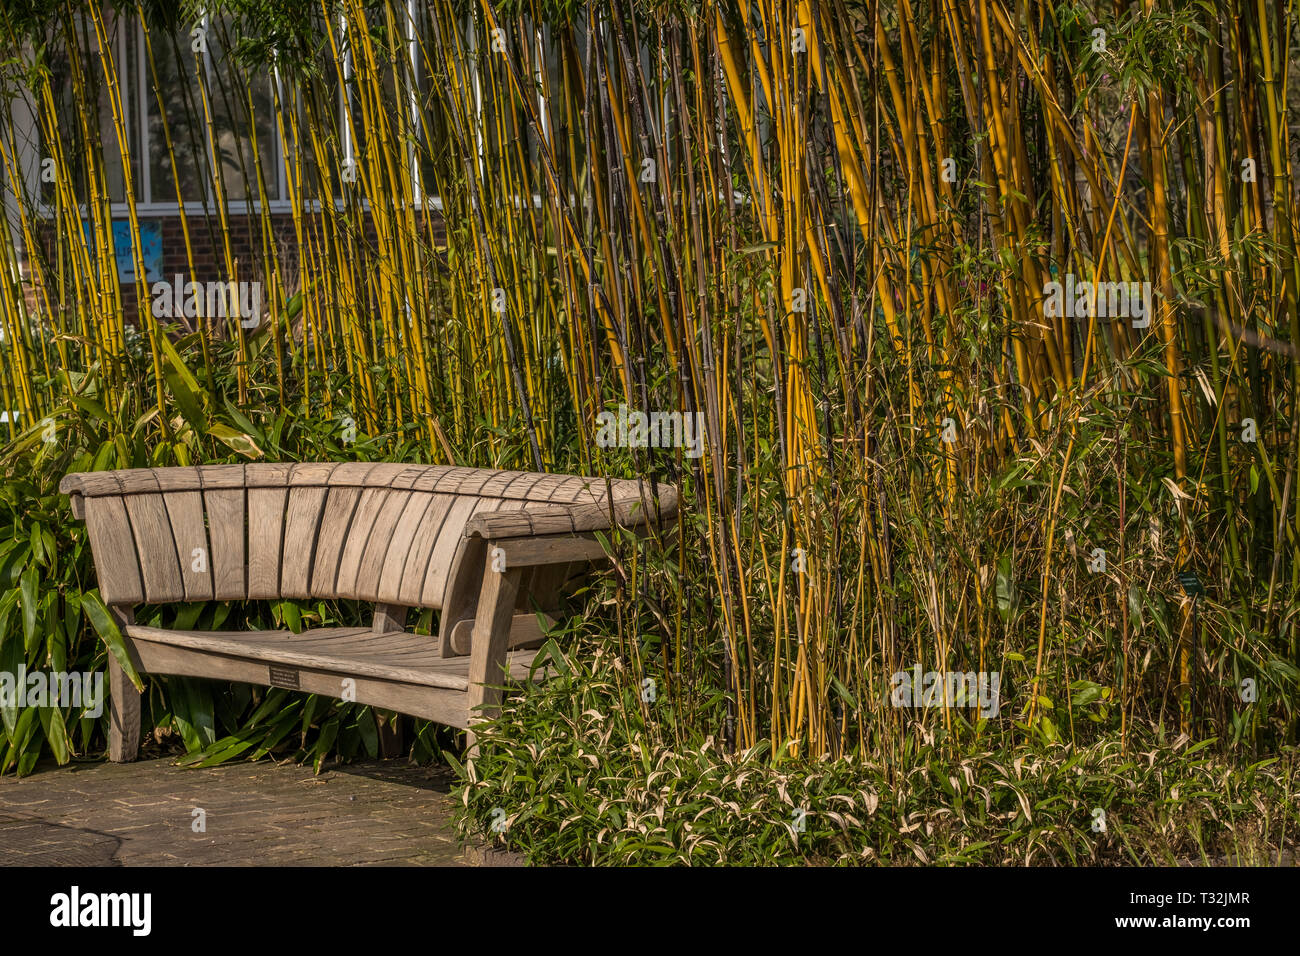 Wooden Garden bench chair Stock Photo